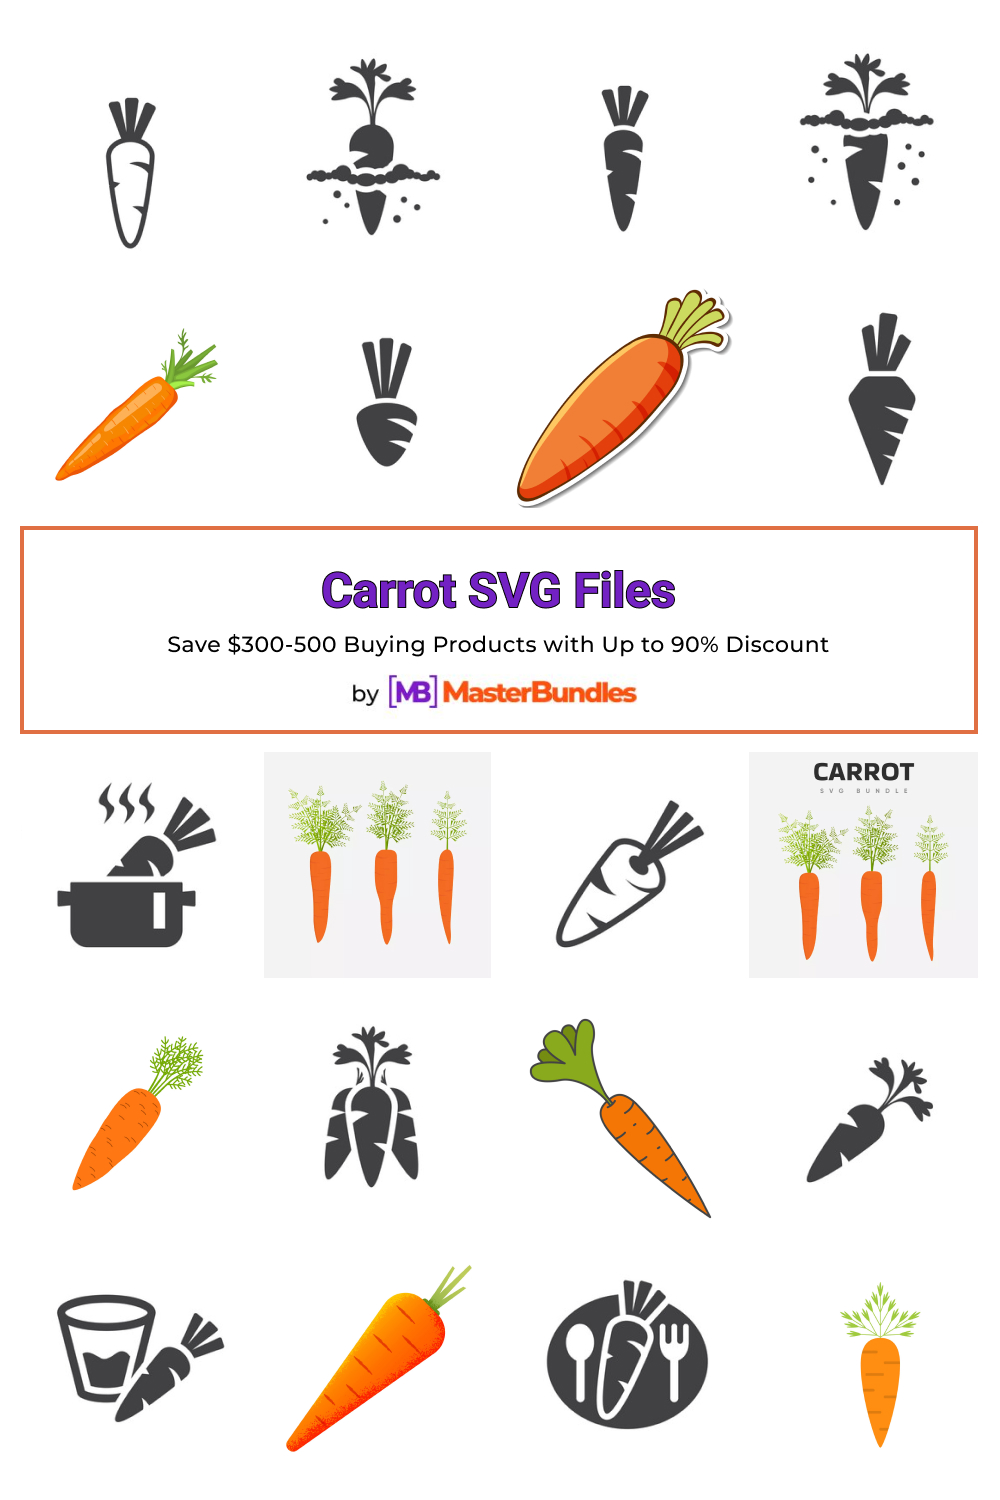 carrot svg files pinterest image.